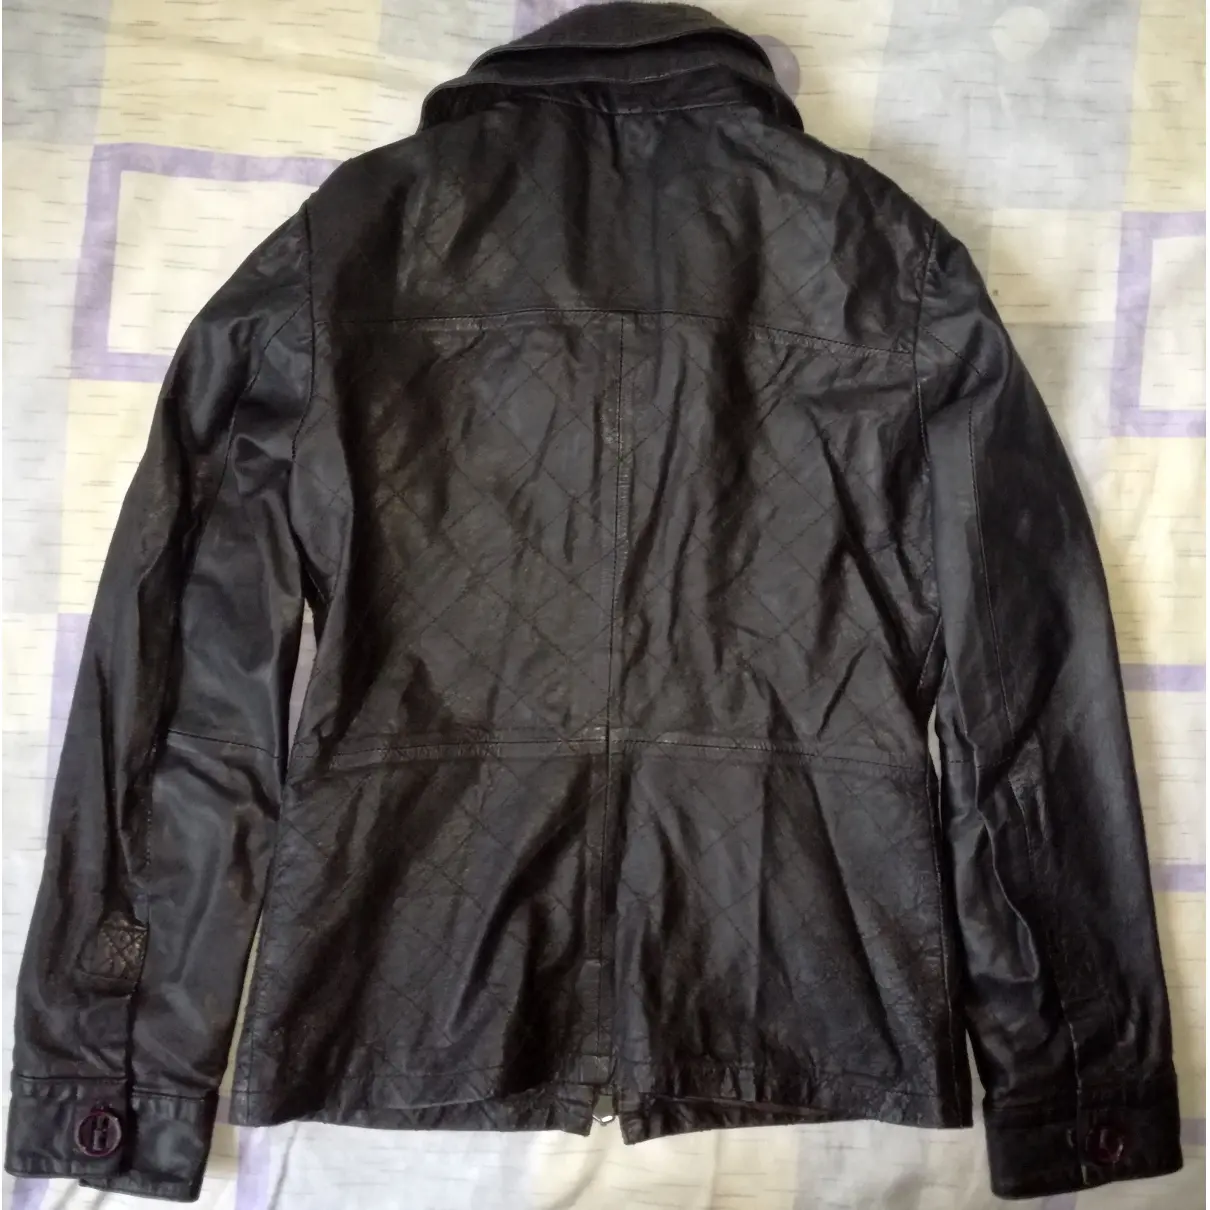 Buy SUPERDRY Leather jacket online